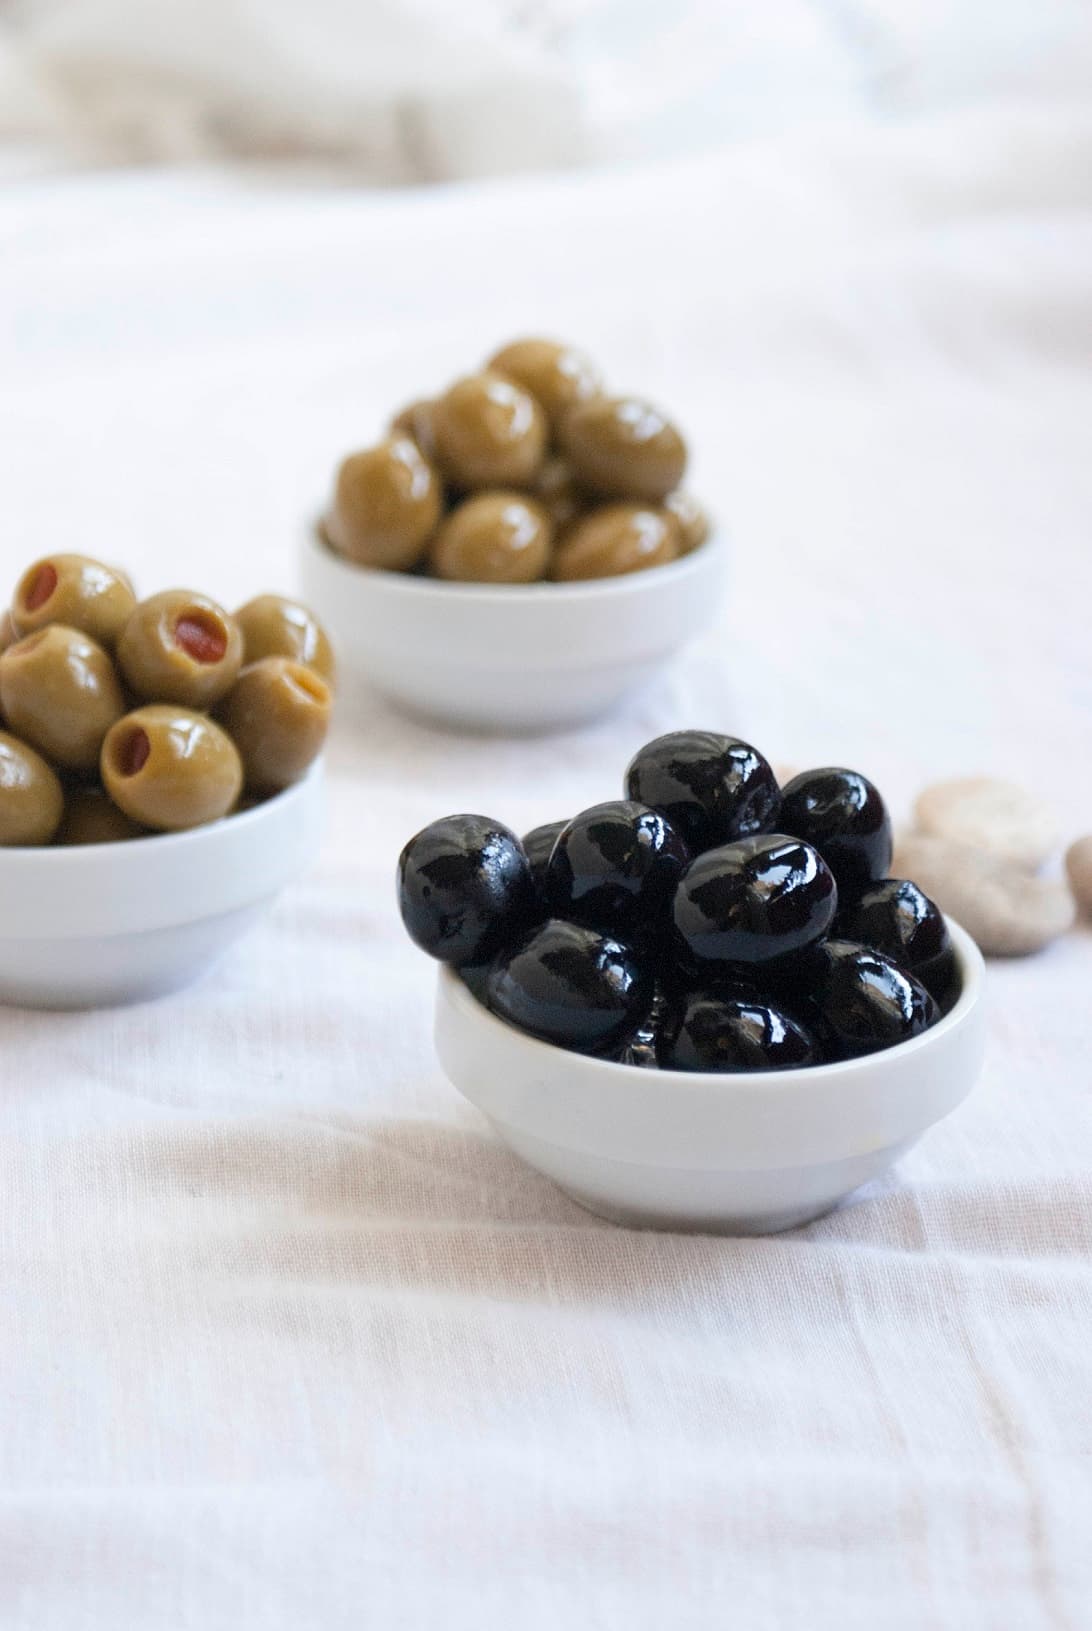 The olive in the Mediterranean Diet